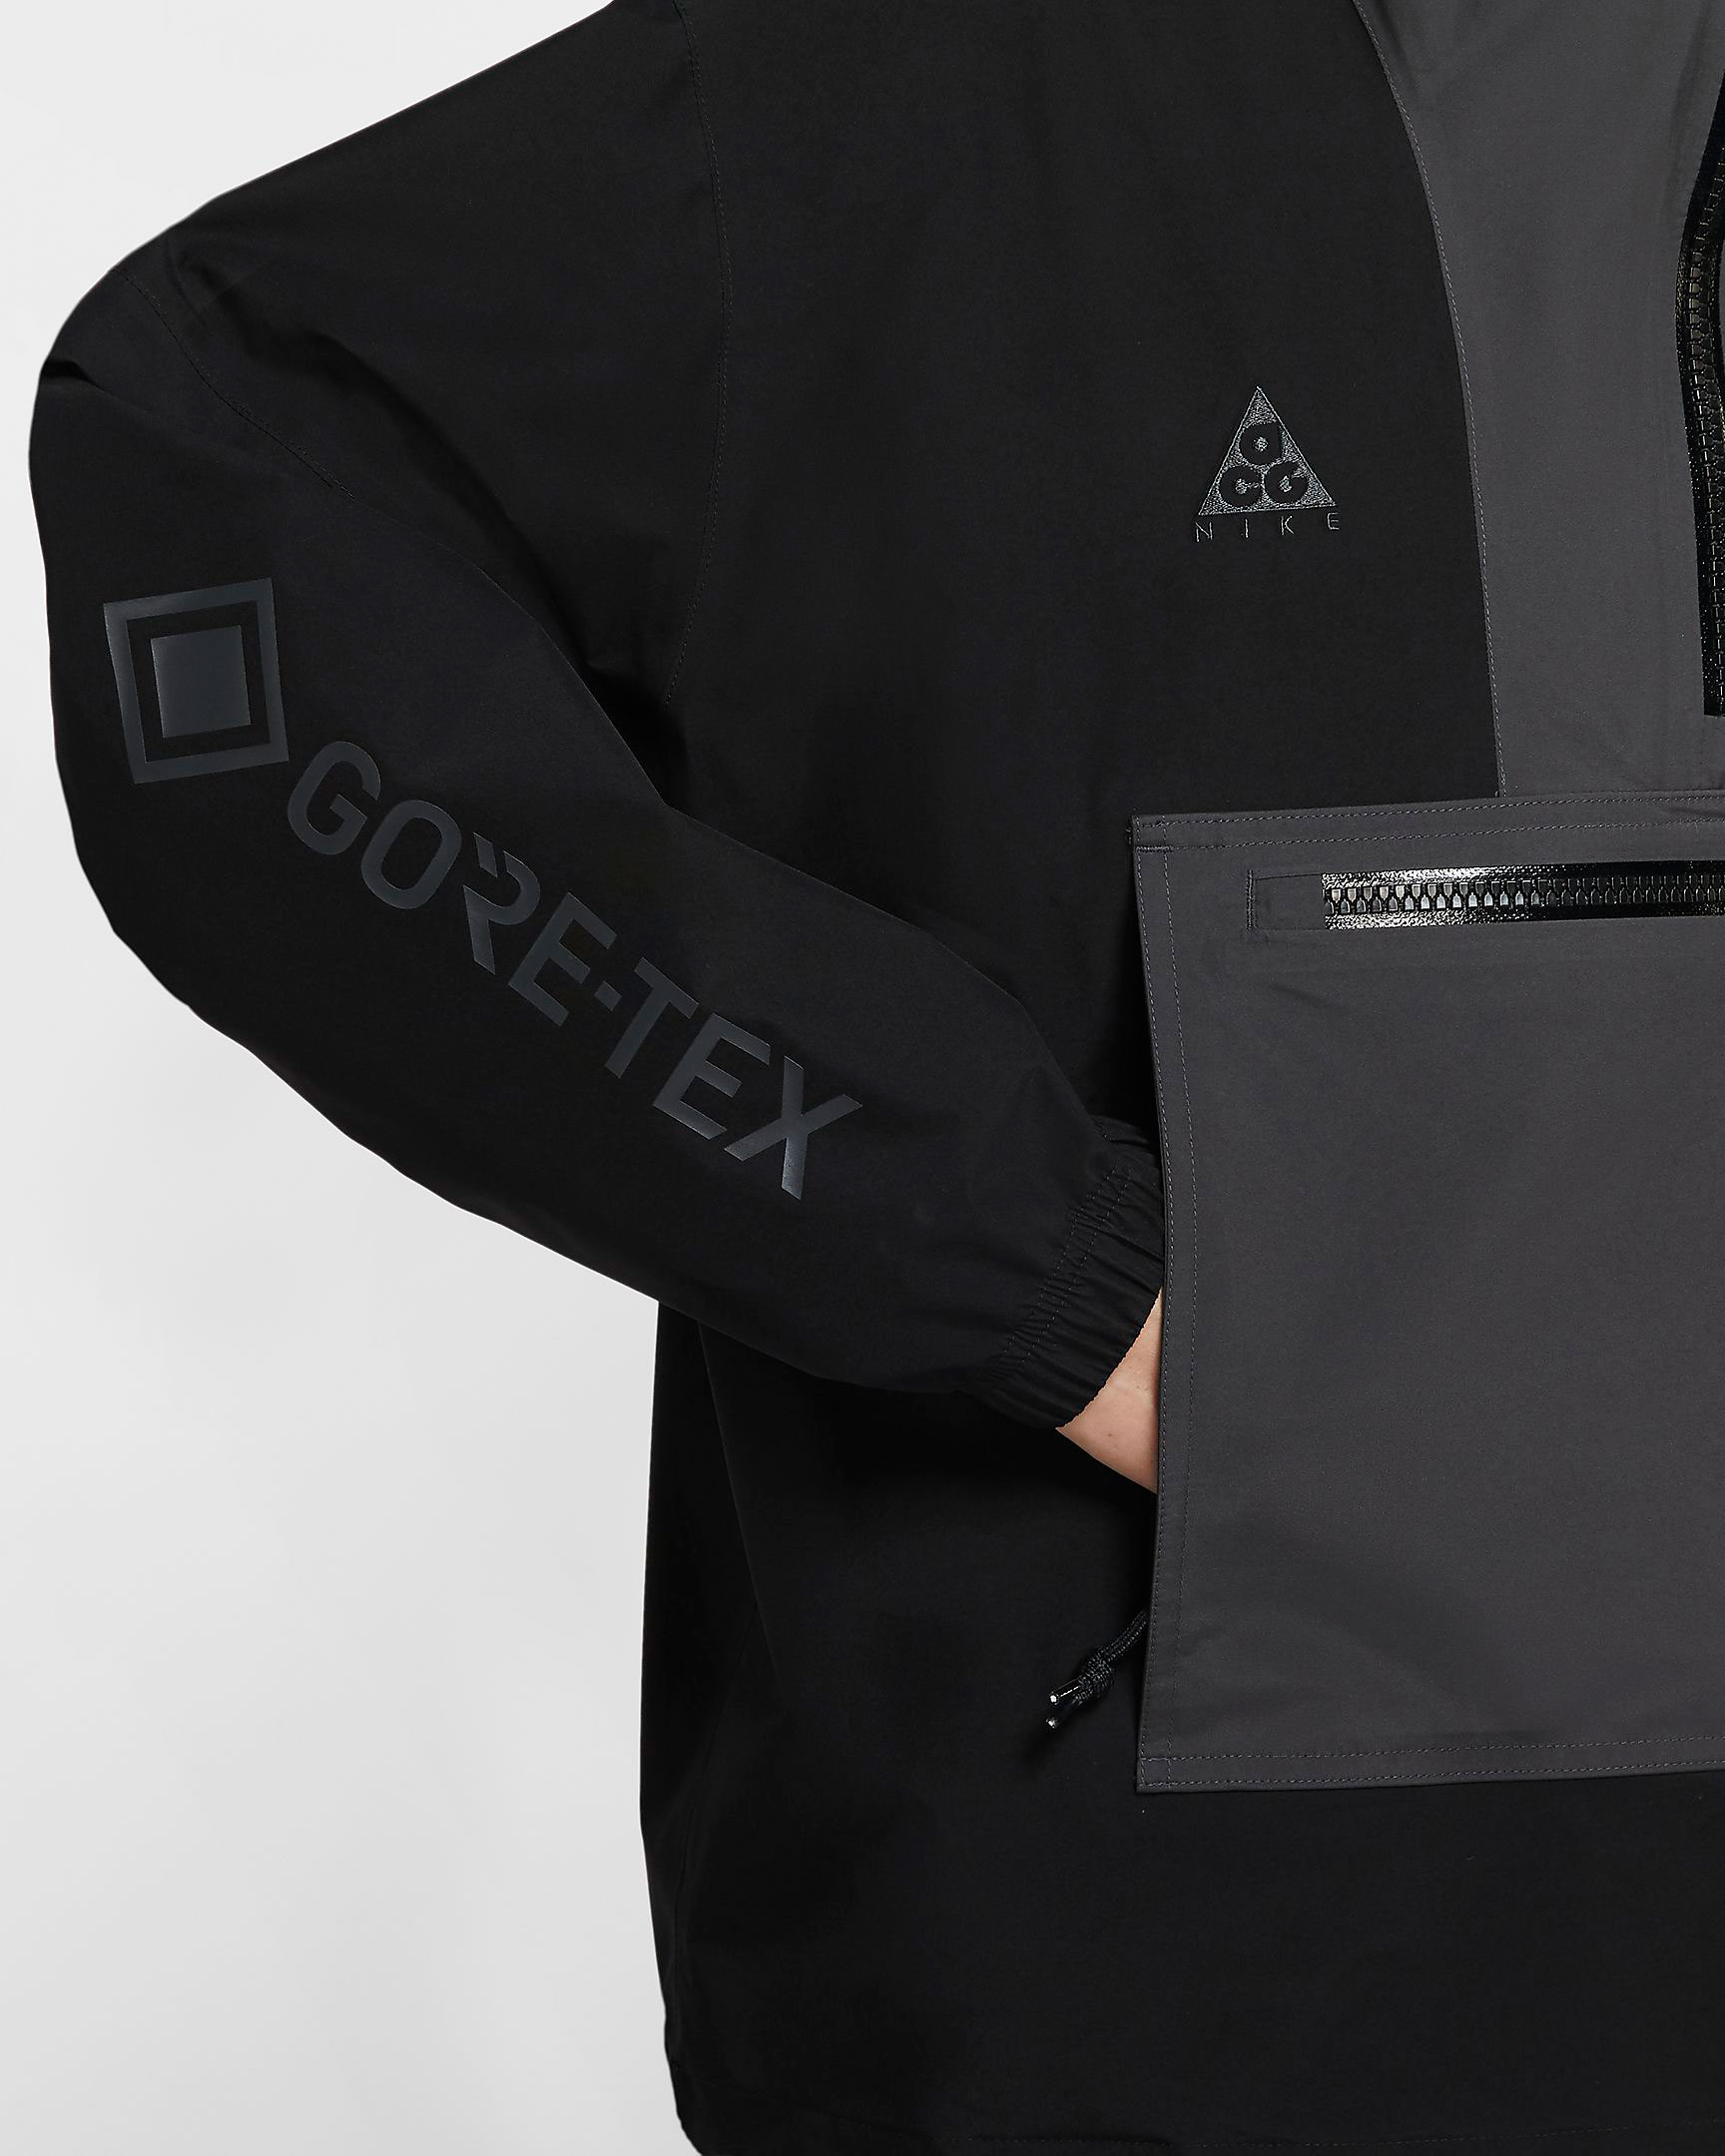 nike-acg-goretex-jacket-black-grey-2